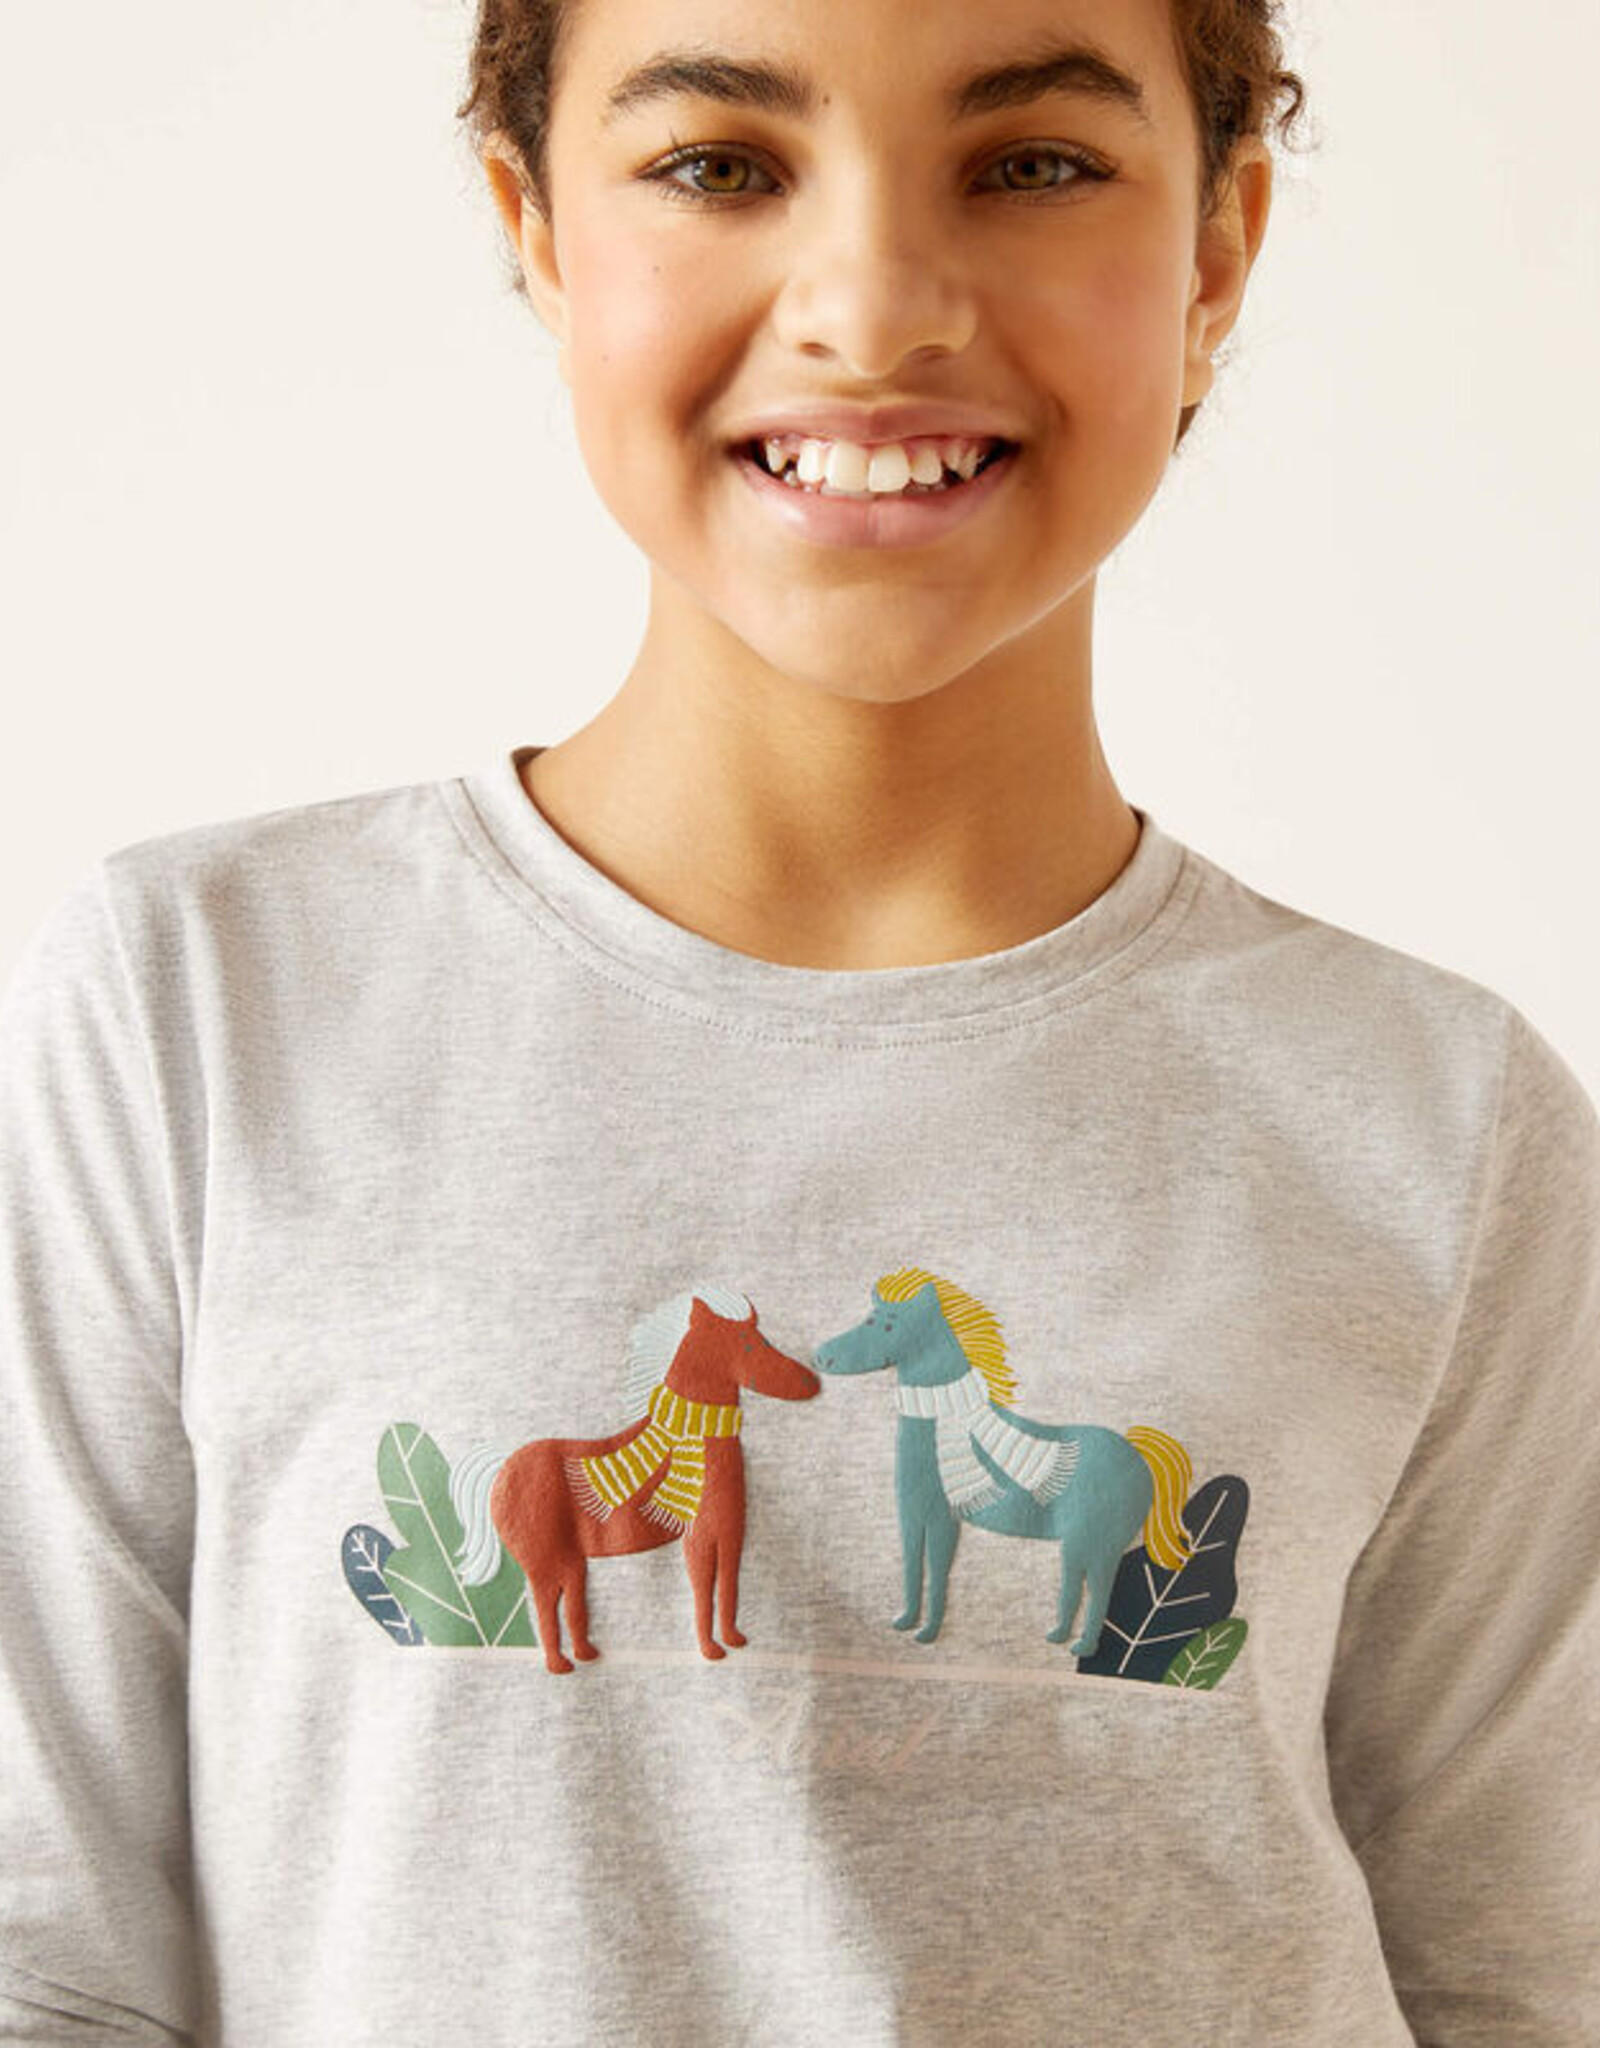 Ariat Kids' Winter Fashions Tee Shirt